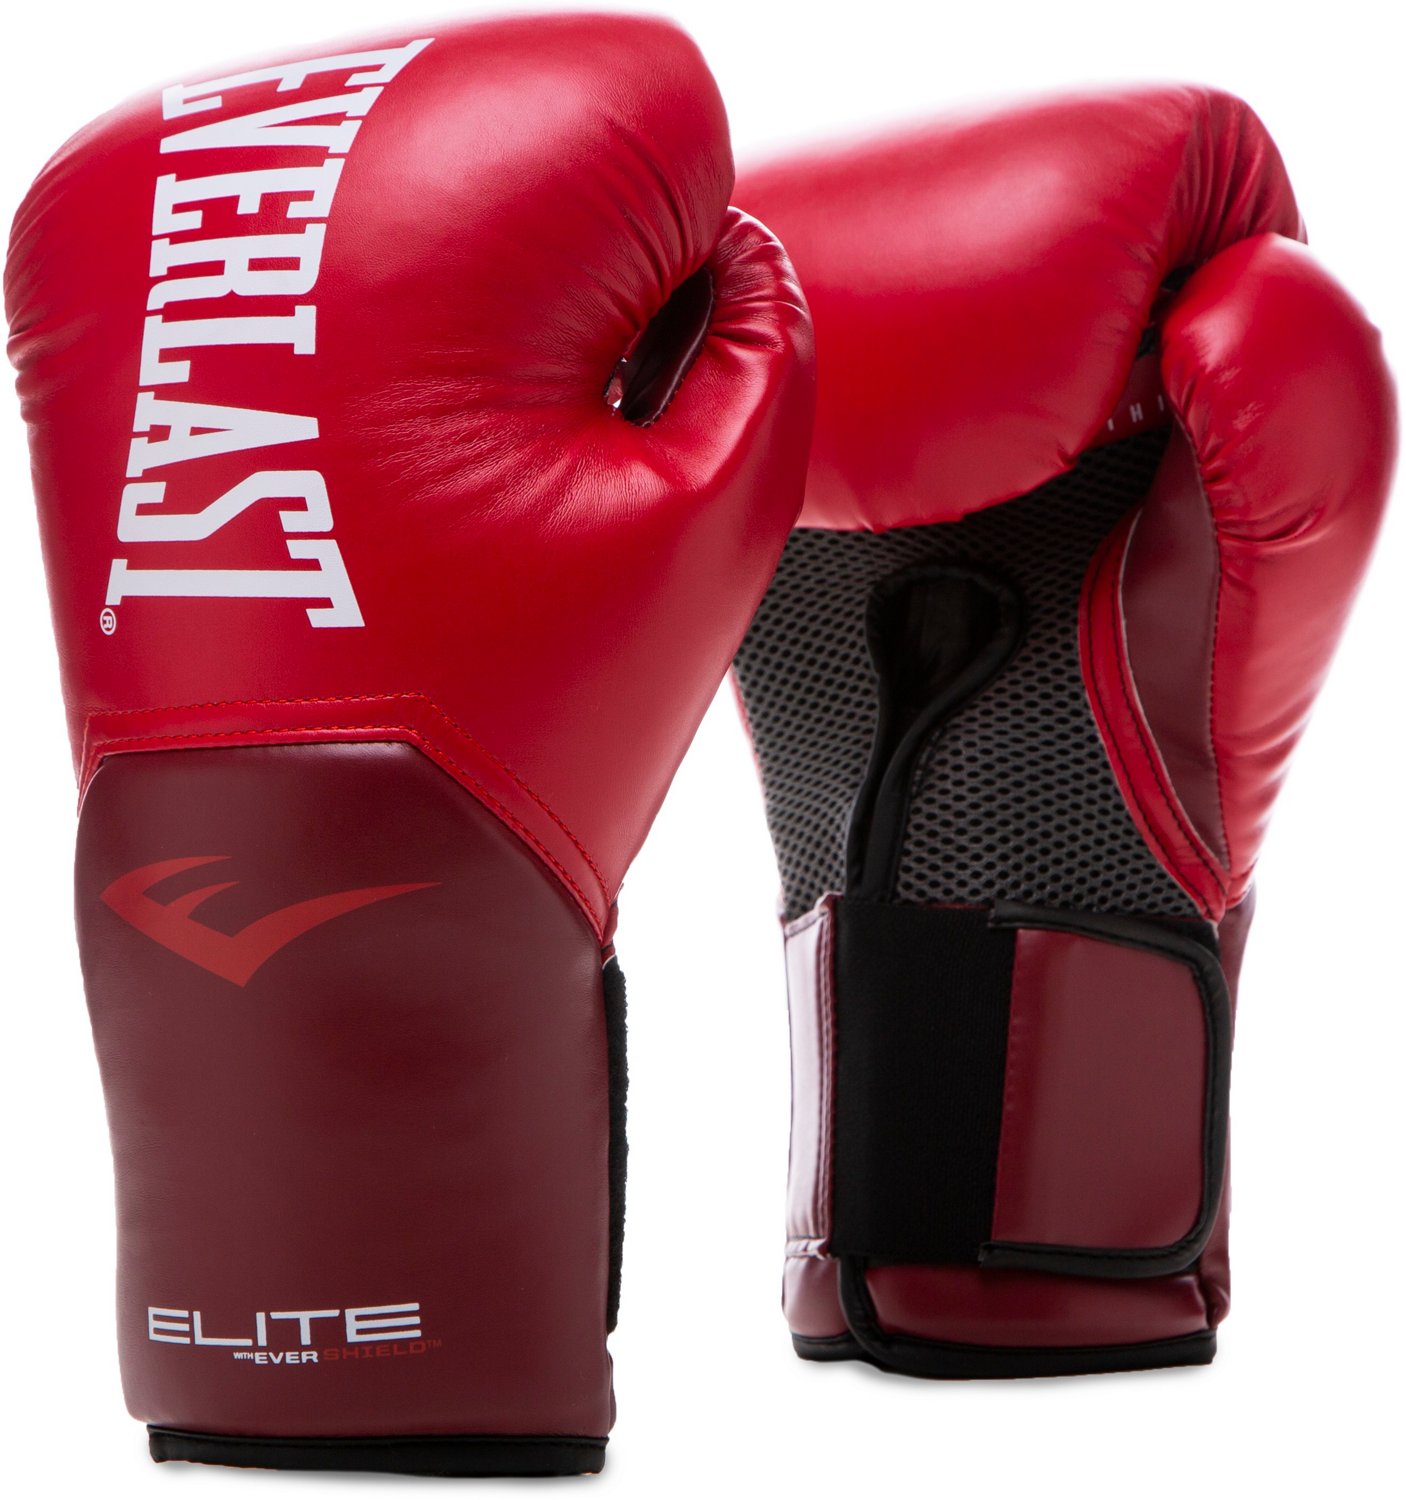 Everlast Pro Style Elite 8 oz Training Gloves